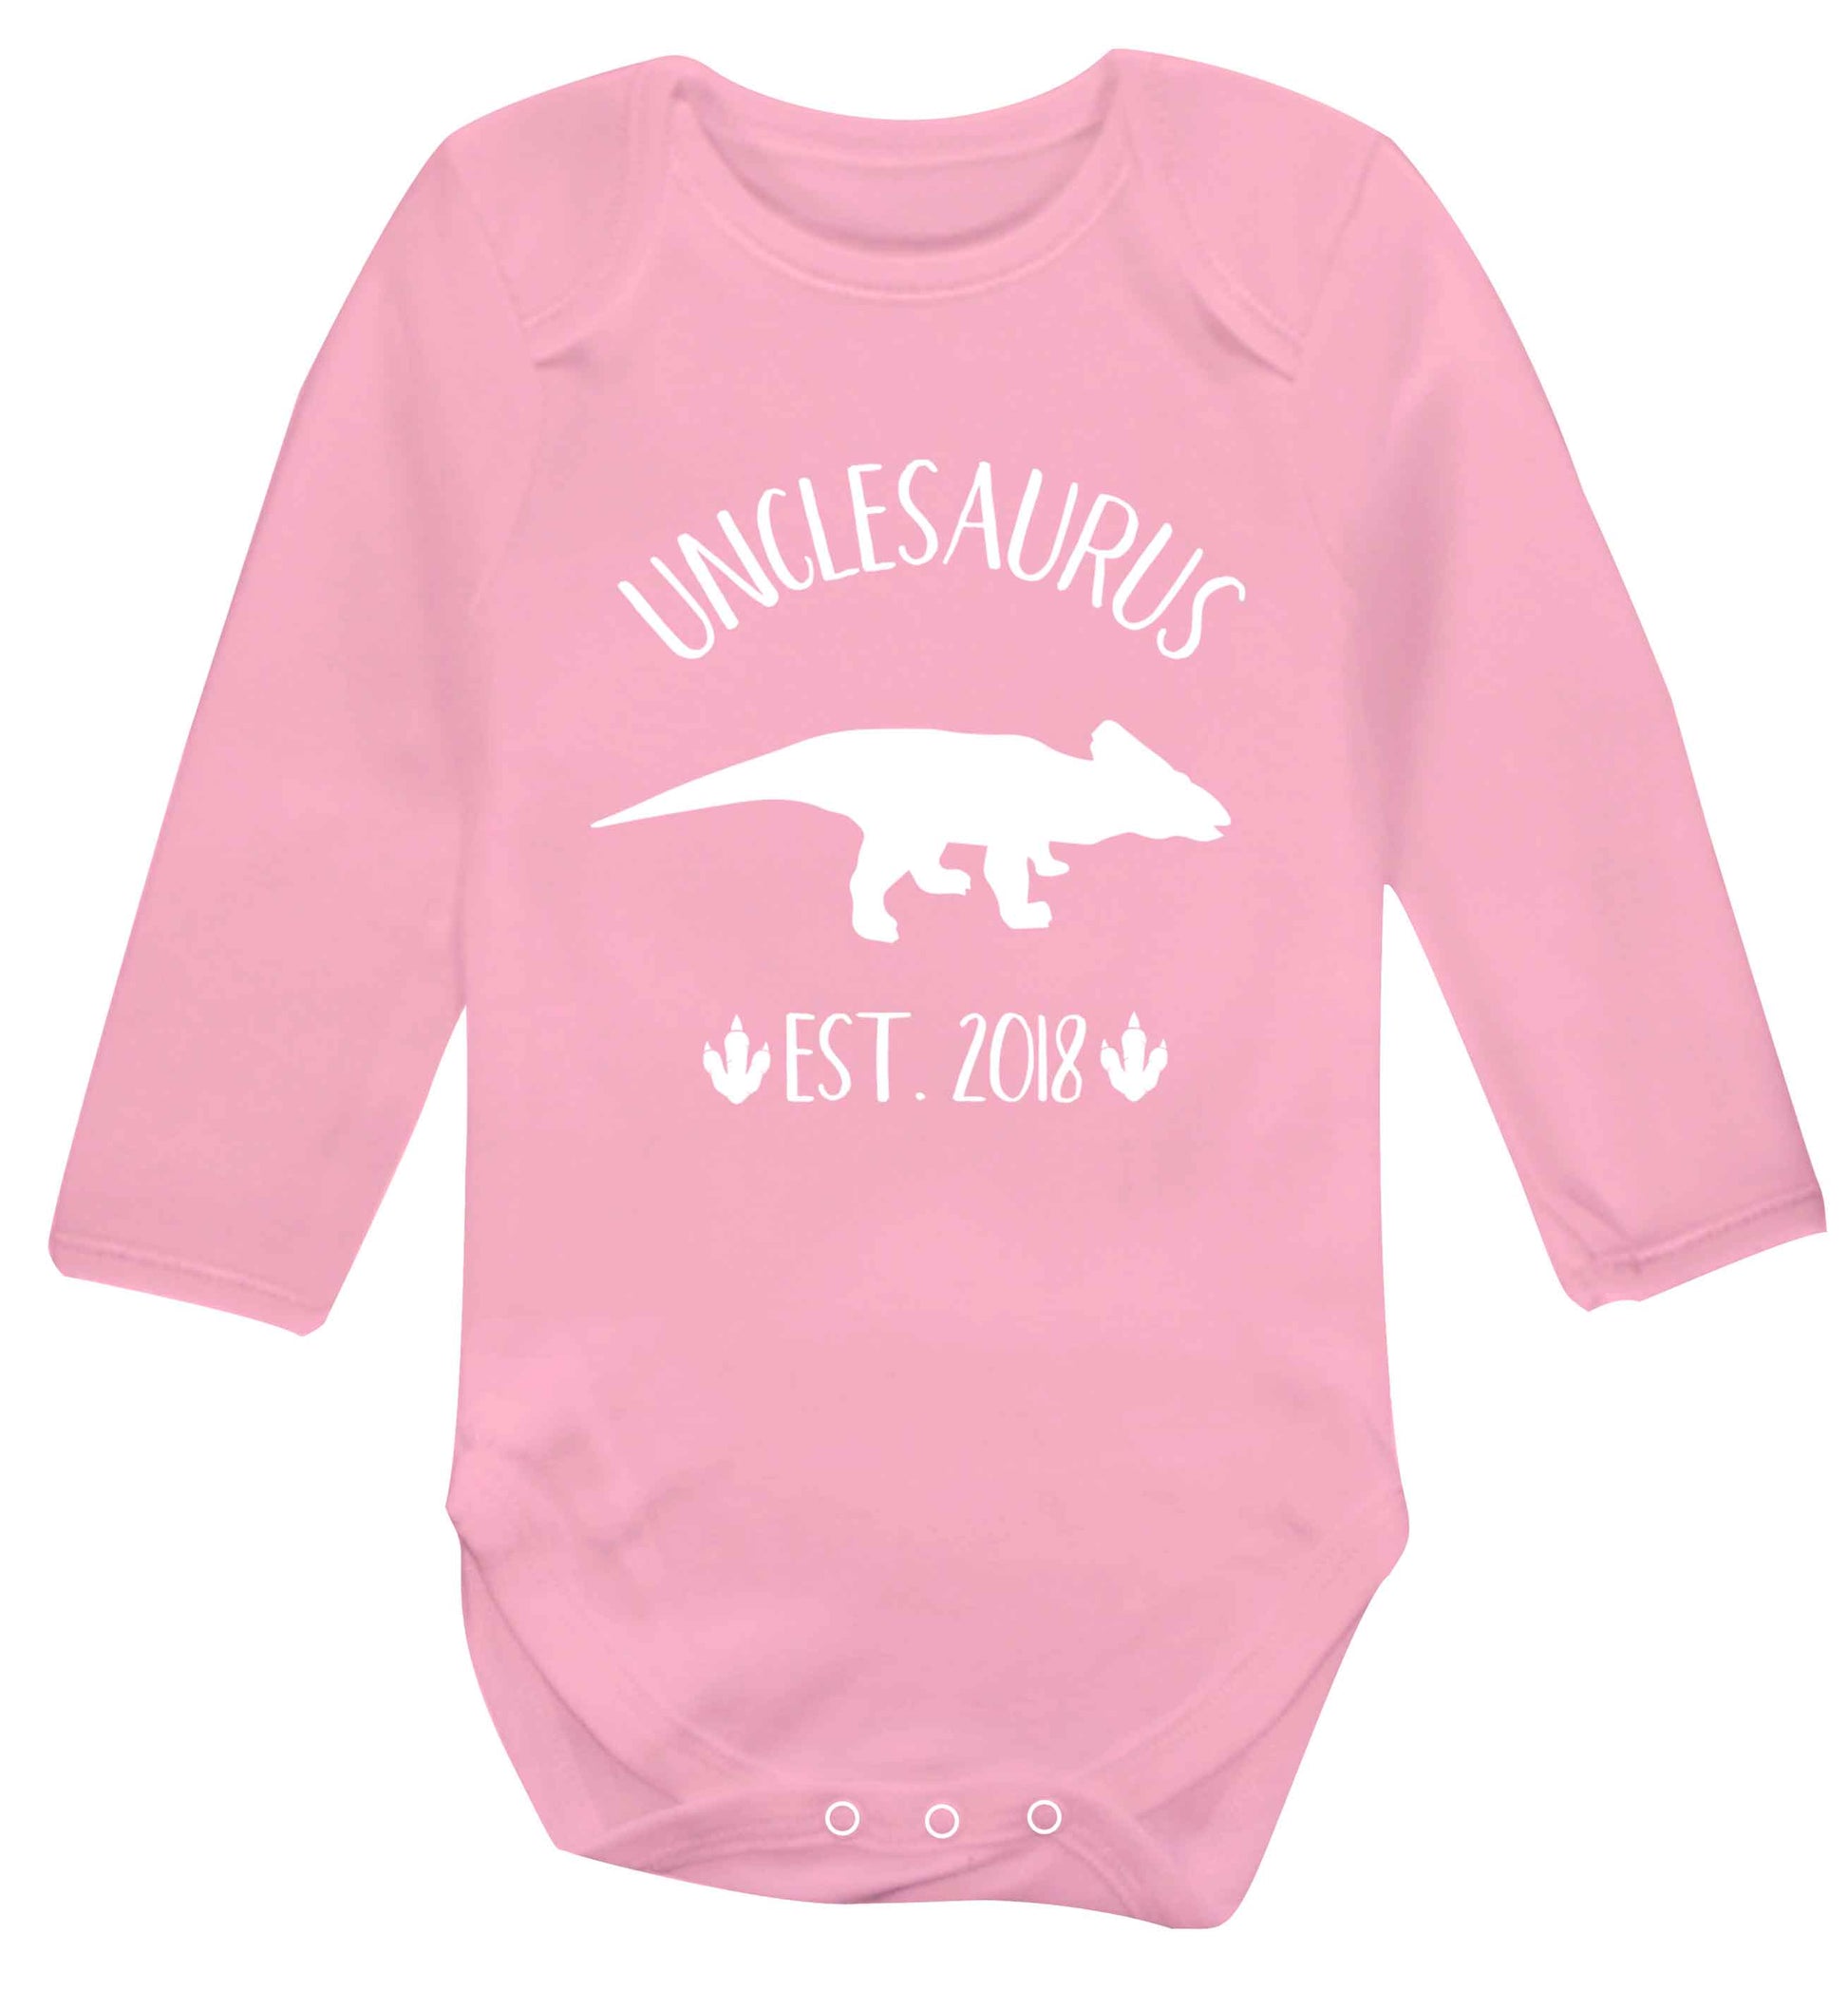 Personalised unclesaurus since (custom date) Baby Vest long sleeved pale pink 6-12 months